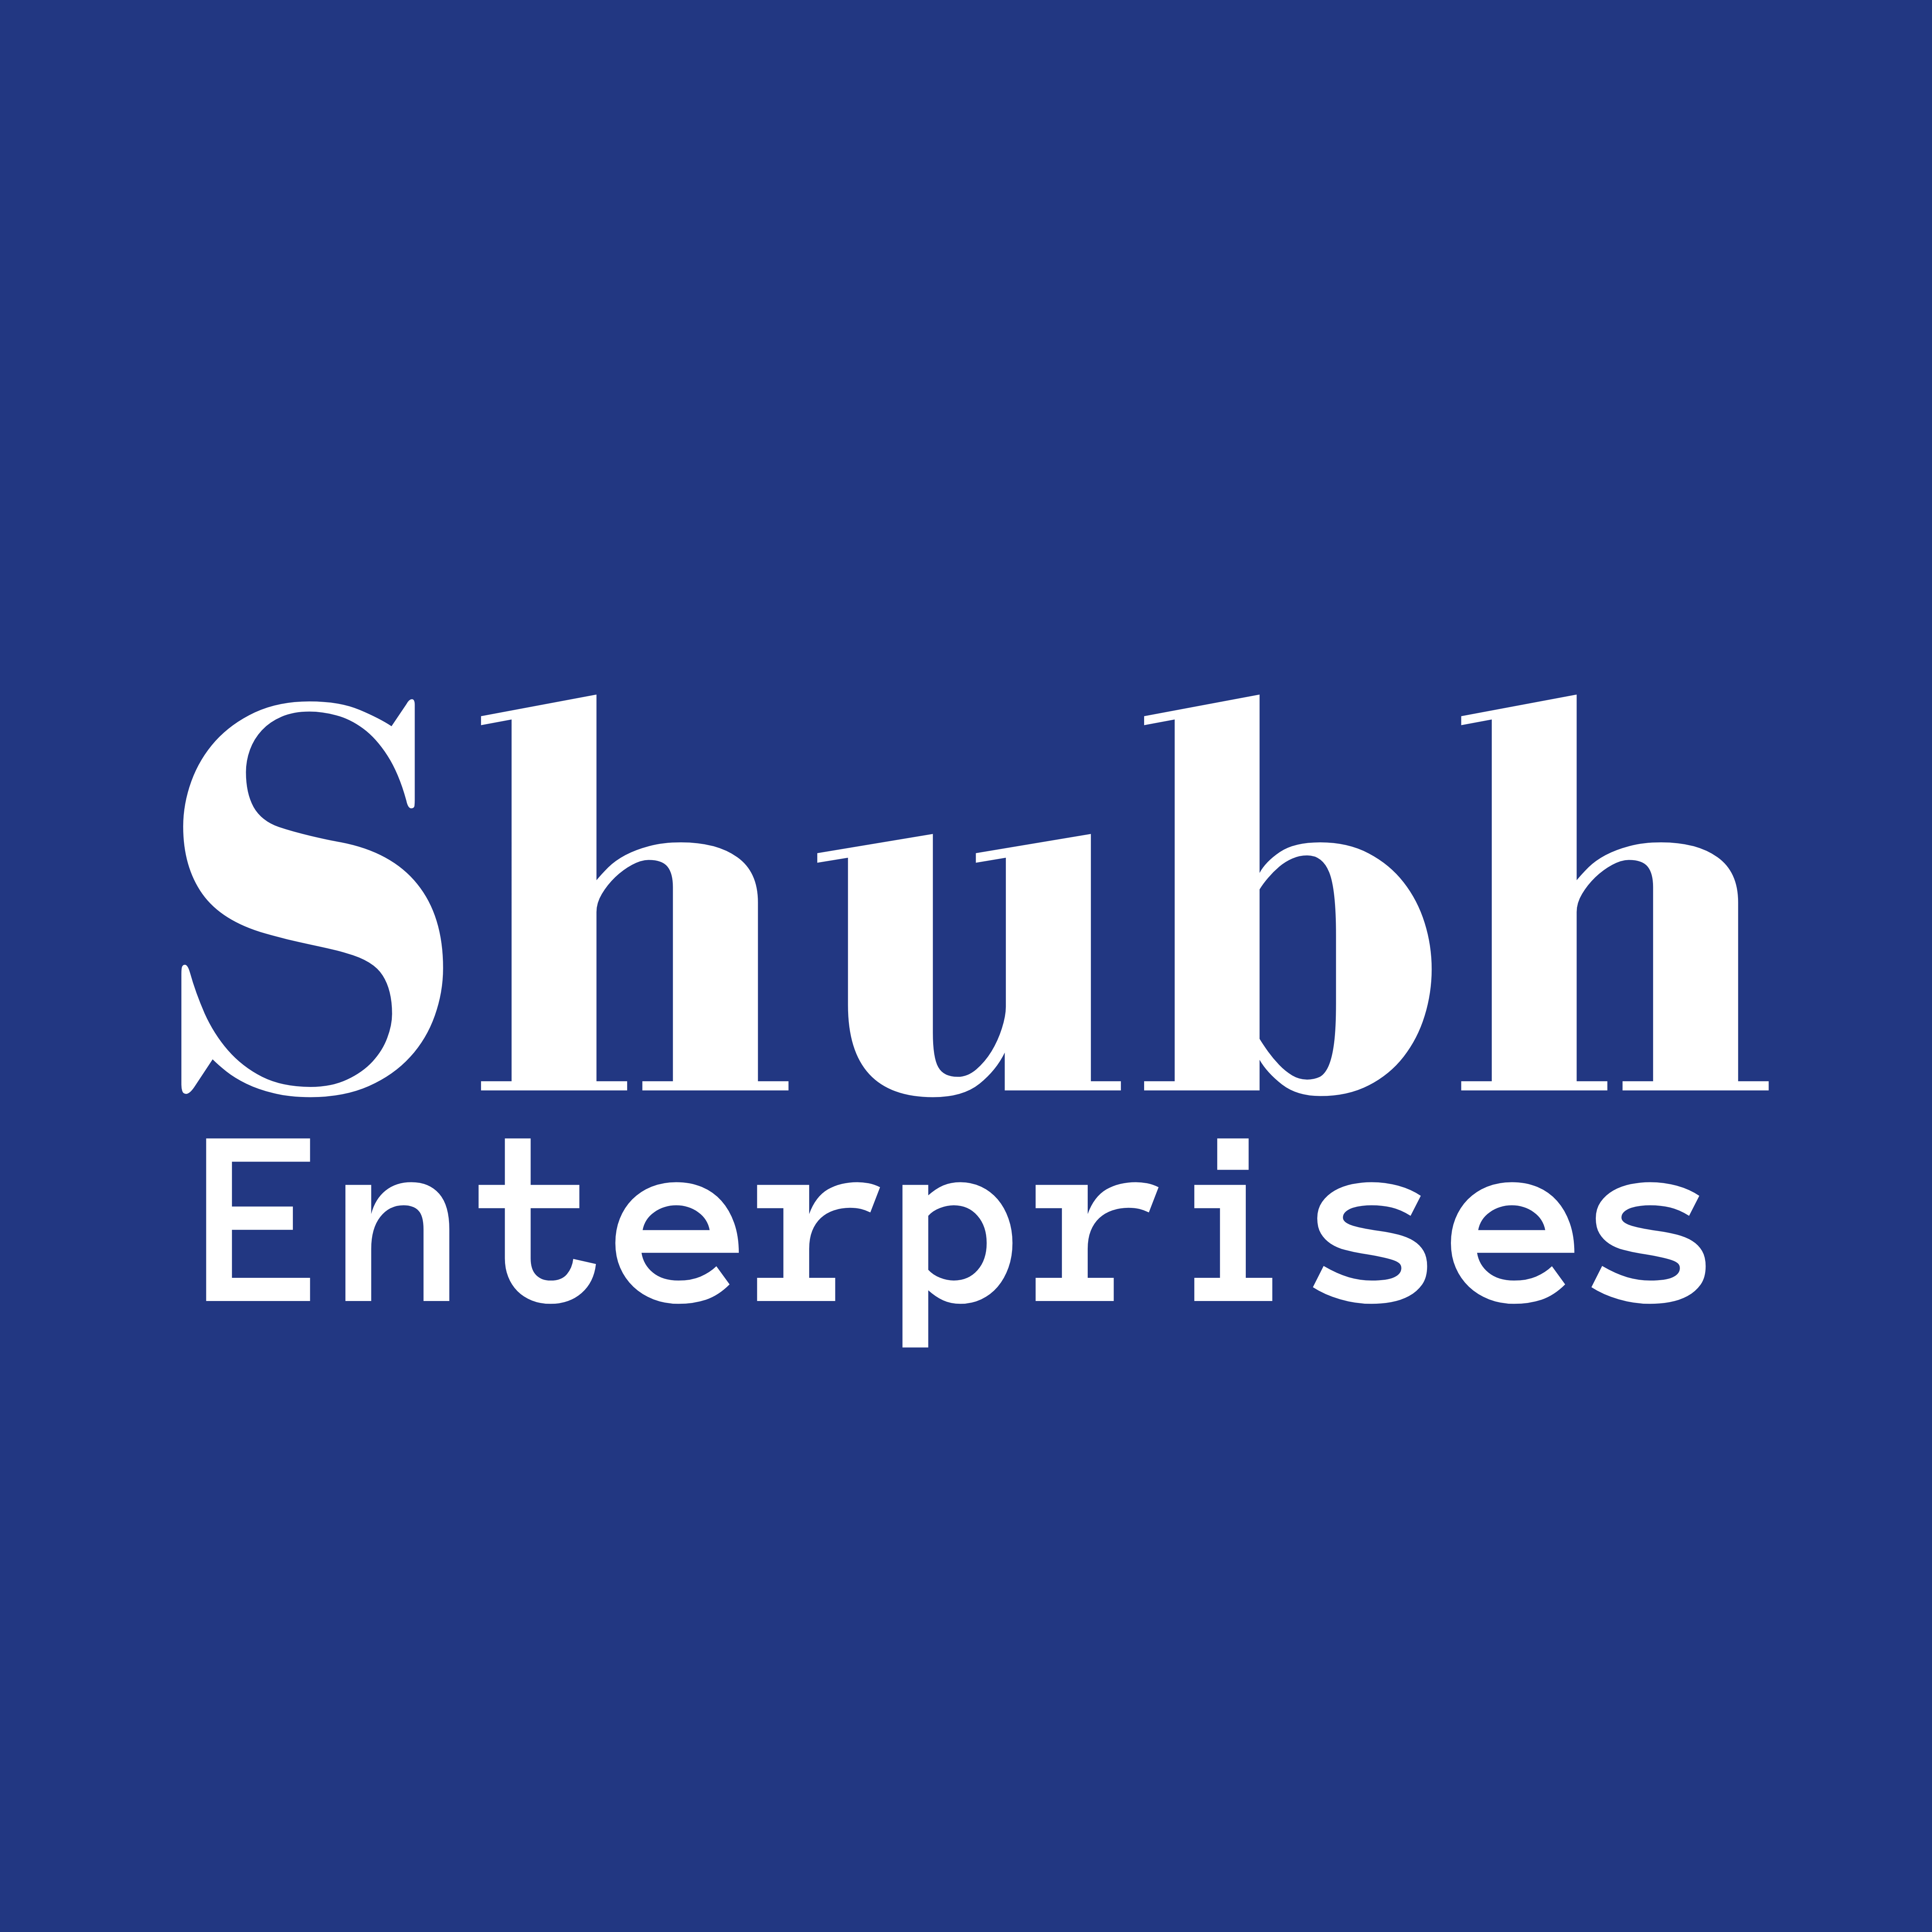 Shubh Enterprises (1) (1)